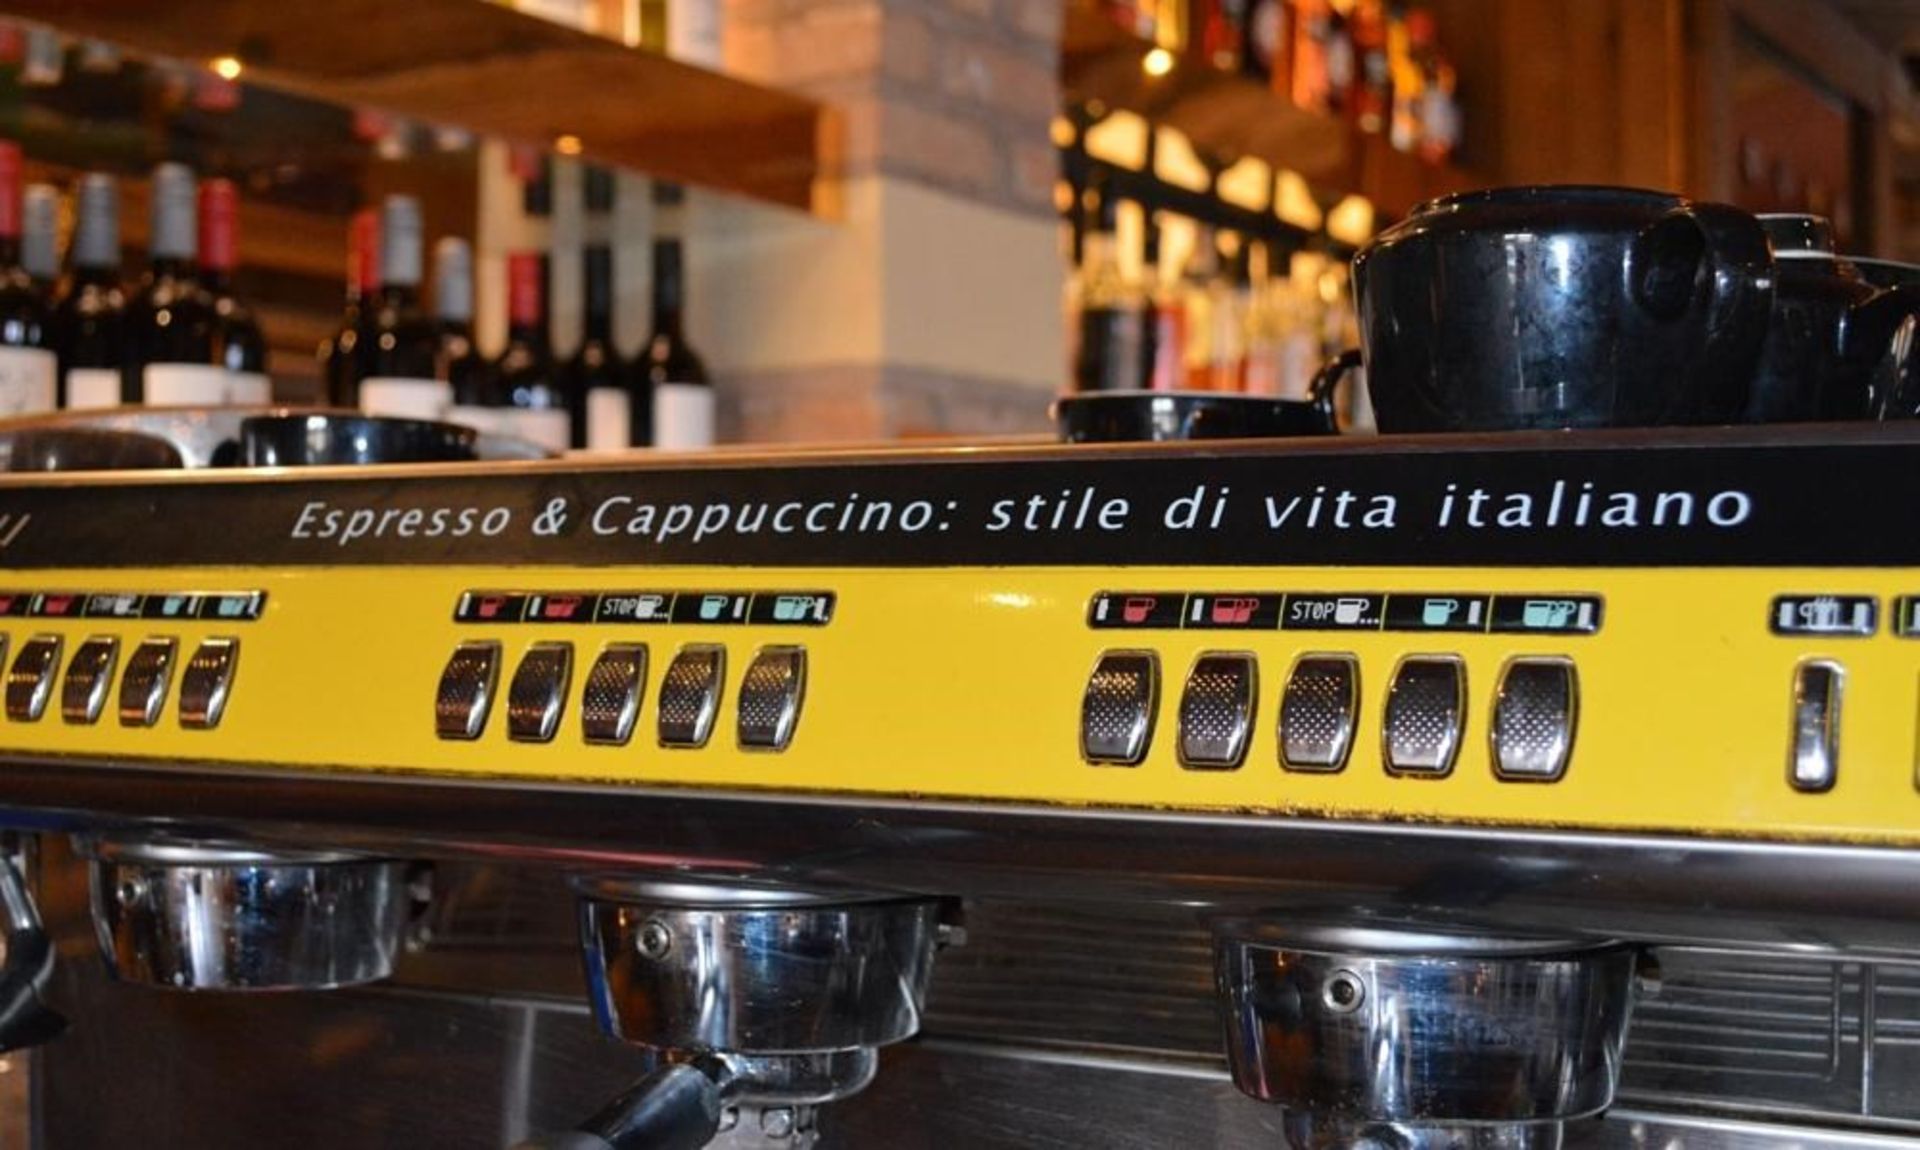 1 x La Cimbalie Espresso 3 Group Coffee Machine in Yellow - Model M39 Dosatron - Approx Dimensions - Image 4 of 6